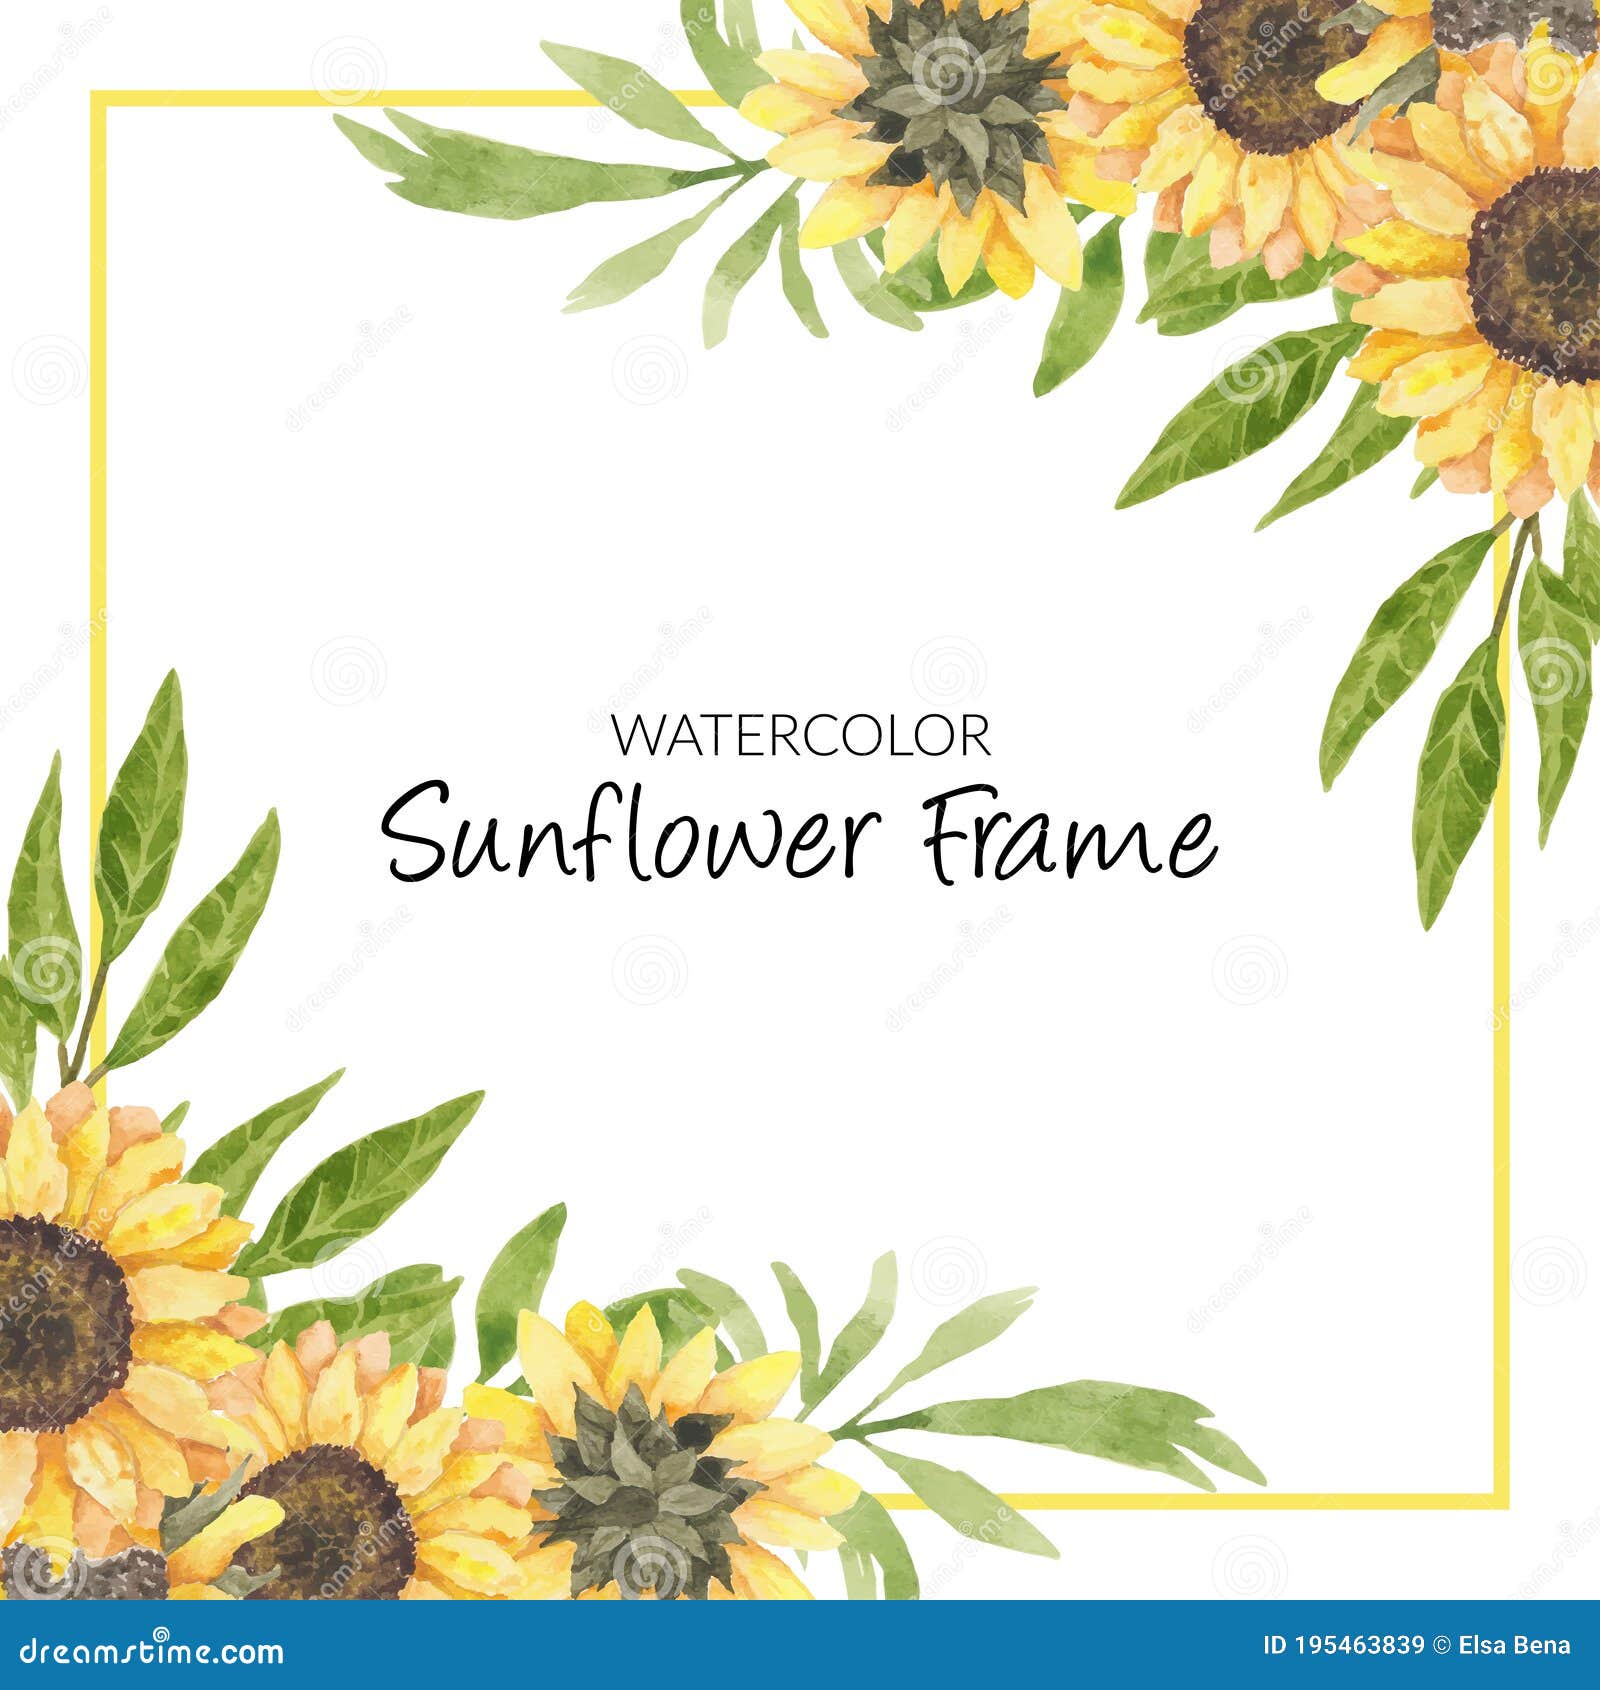 sunflowers border clip art